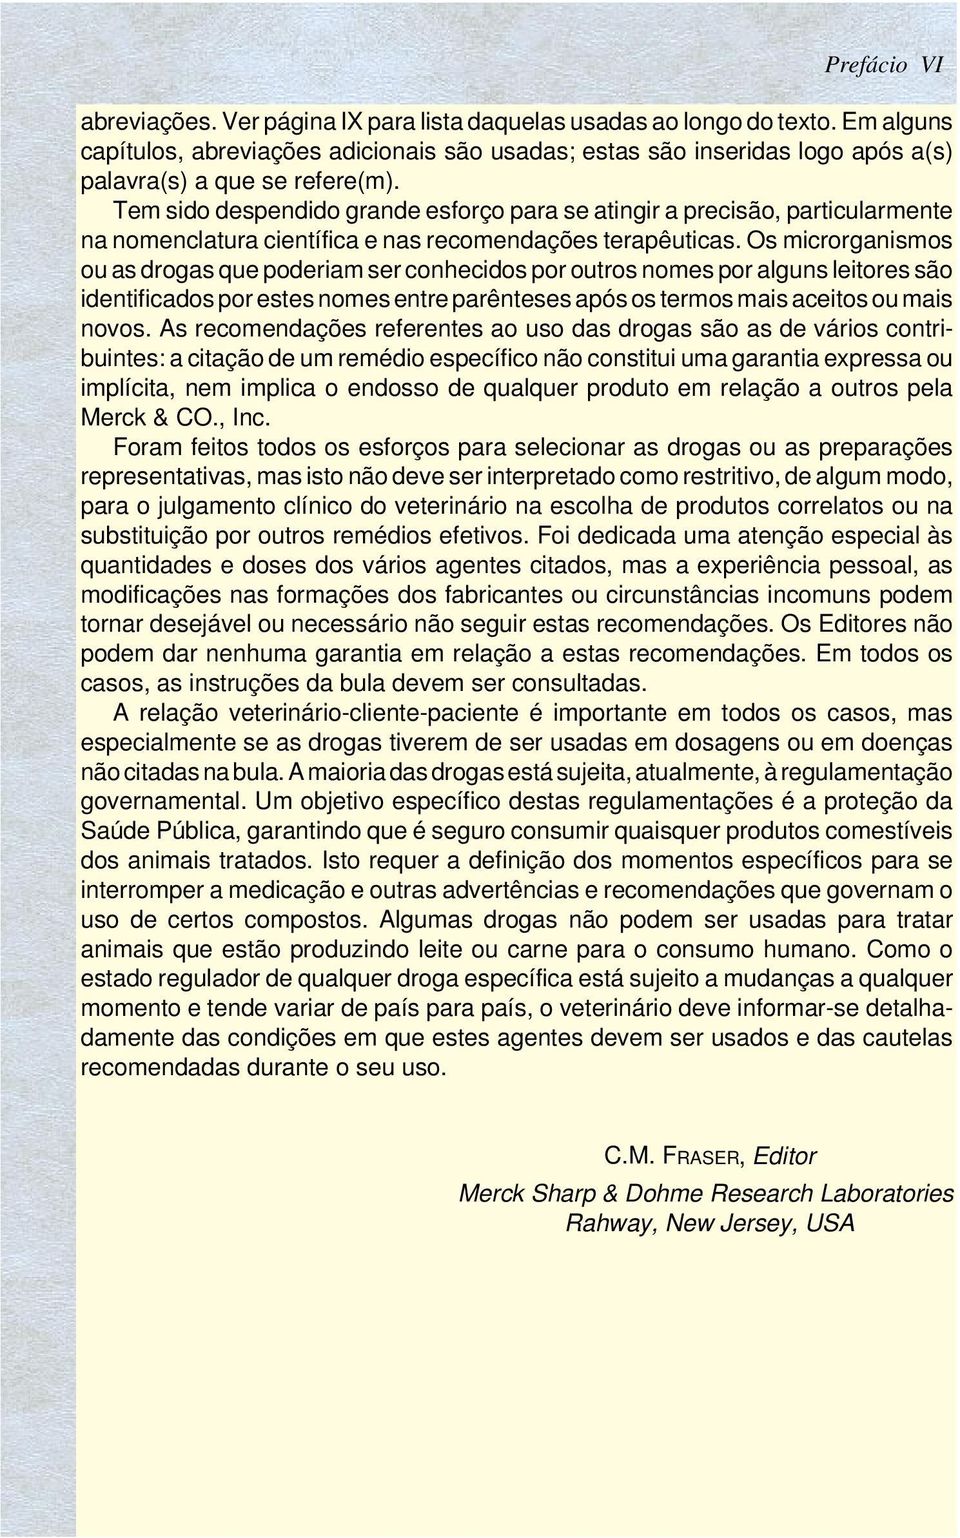 Manual merck portugues download gratis